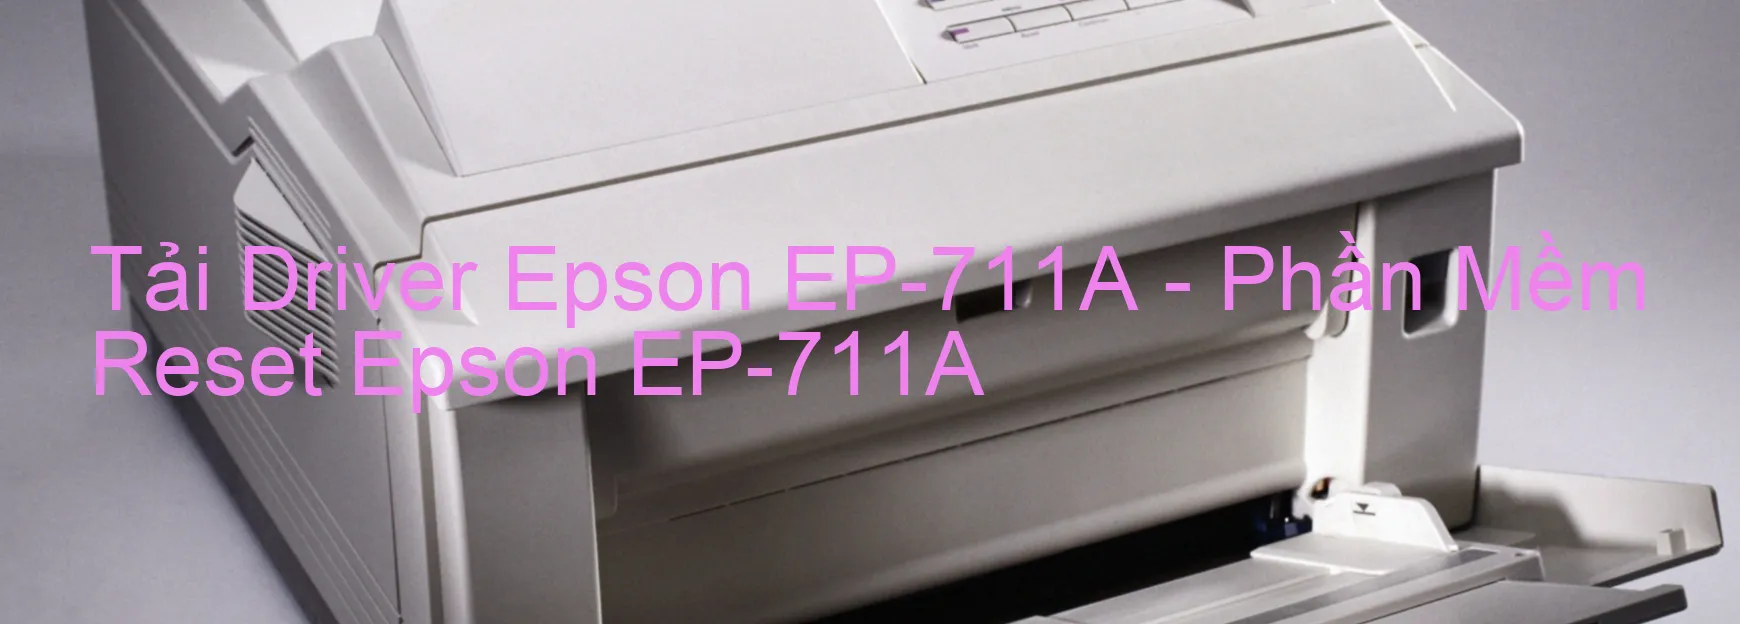 Driver Epson EP-711A, Phần Mềm Reset Epson EP-711A